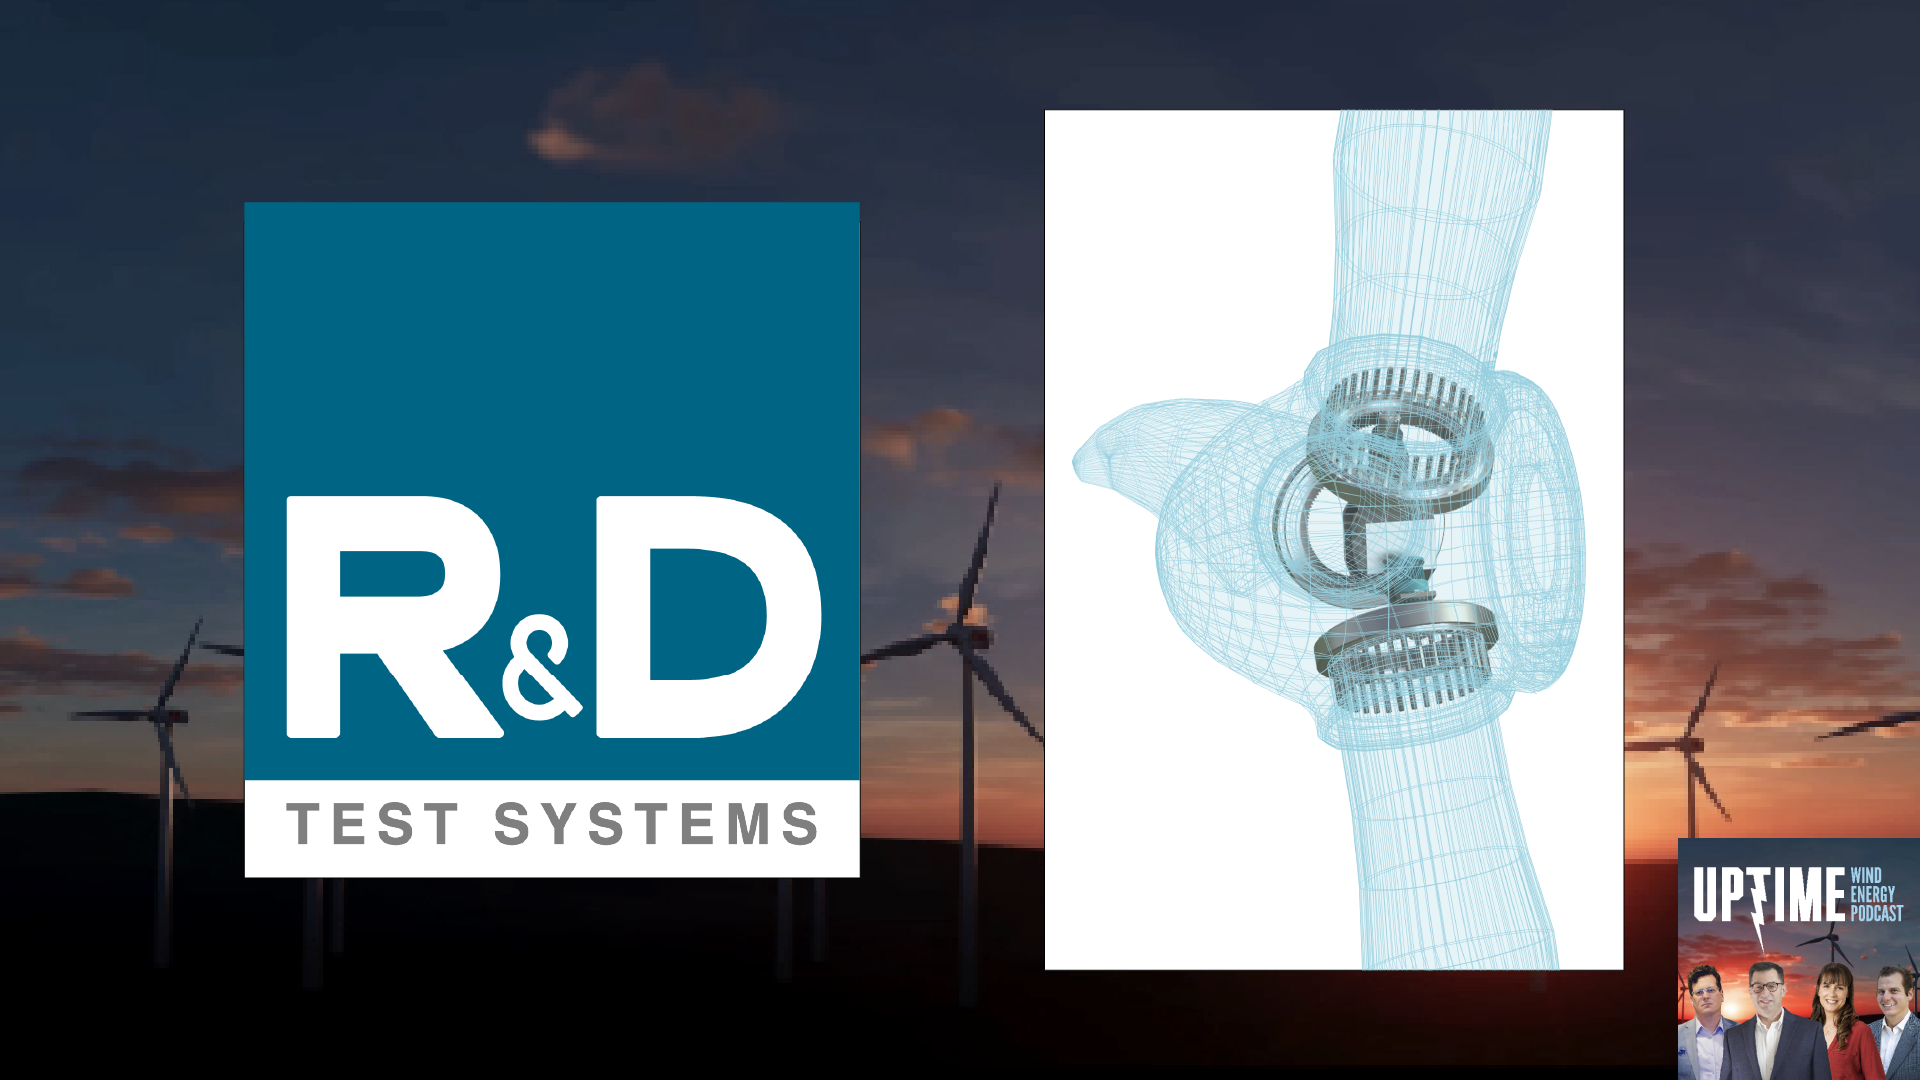 R&D Test Systems: Digital Twins For Wind Turbine Testing